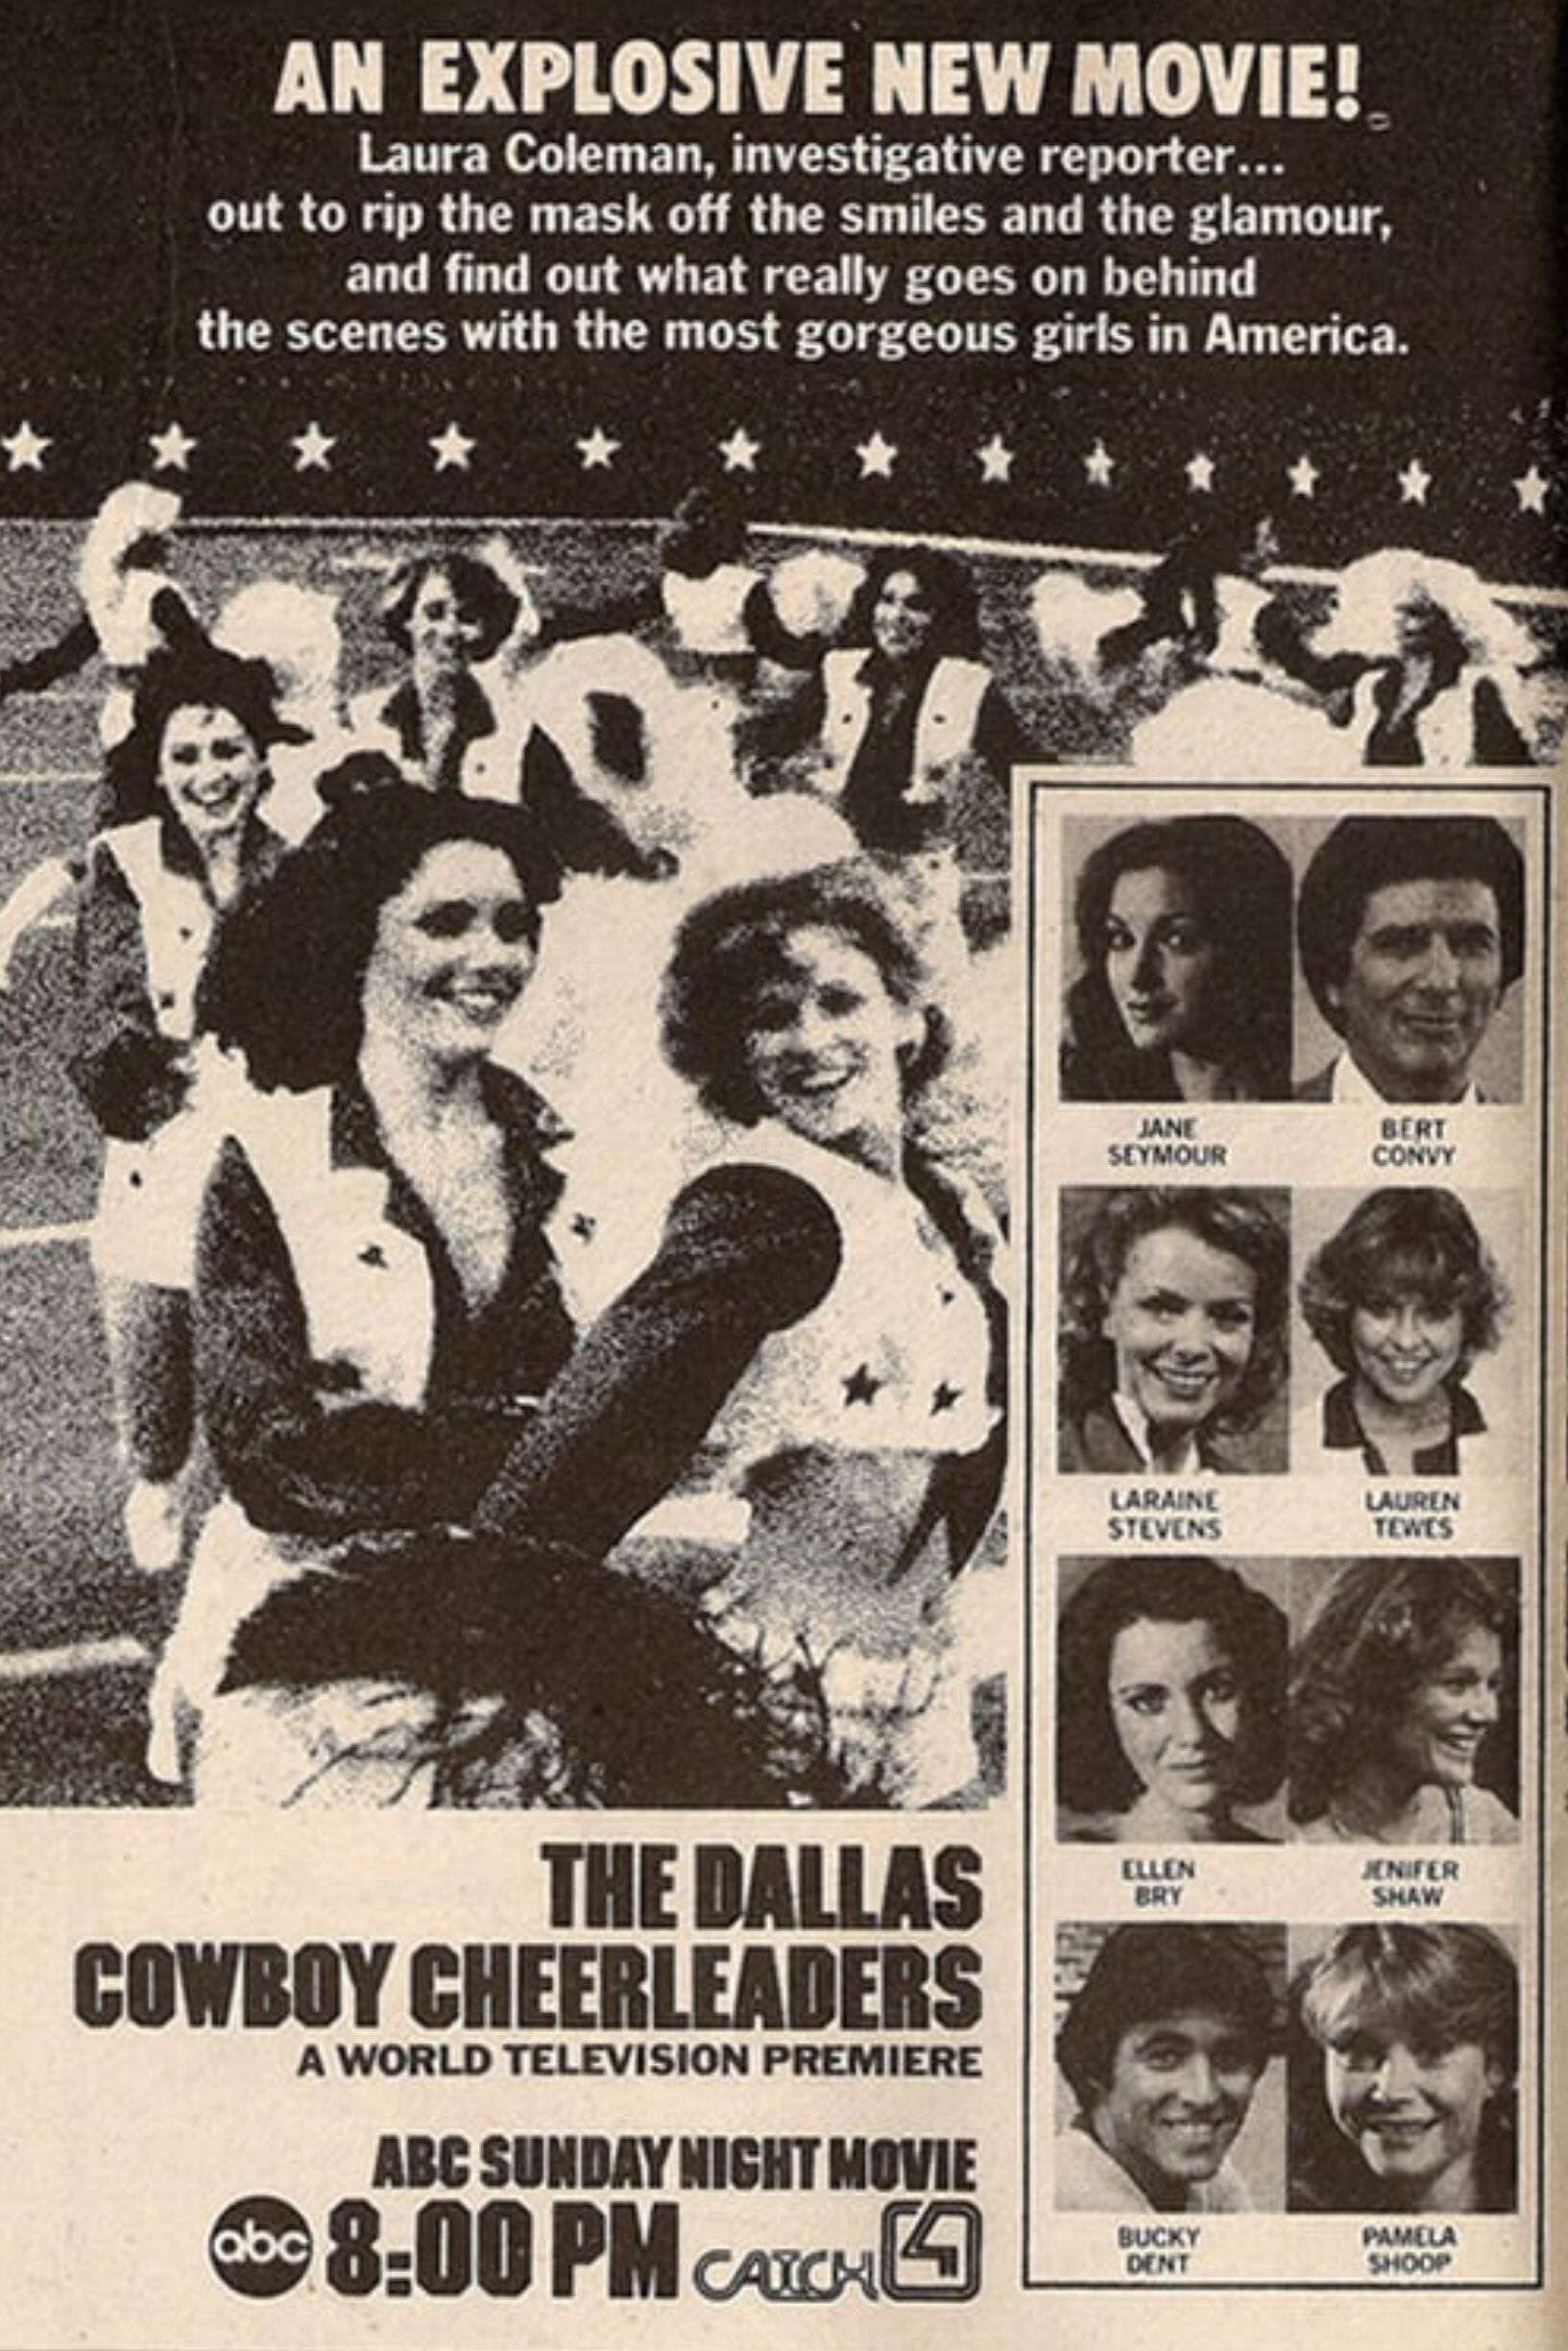 Dallas Cowboys Cheerleaders, Filmpedia, the Films Wiki